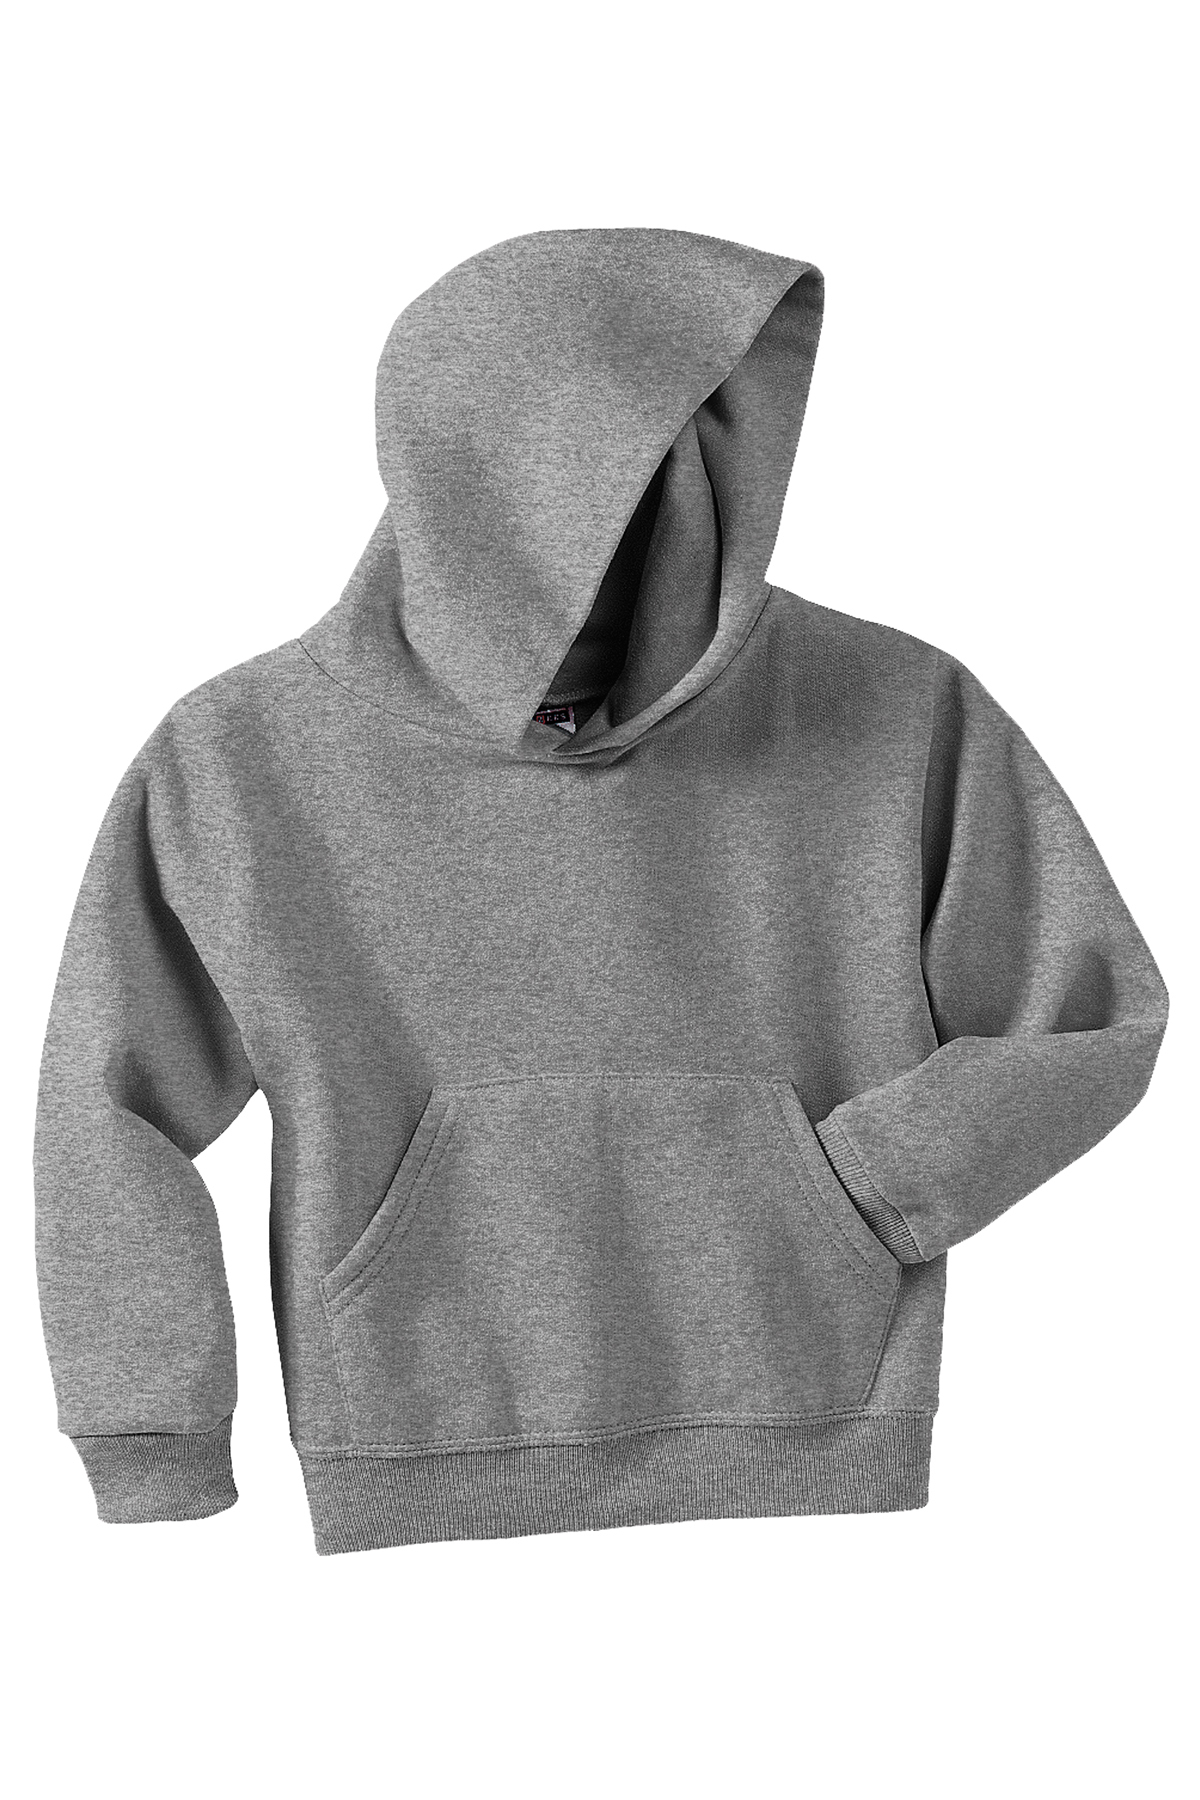 JERZEES - Youth NuBlend Pullover Hooded Sweatshirt | Product | SanMar